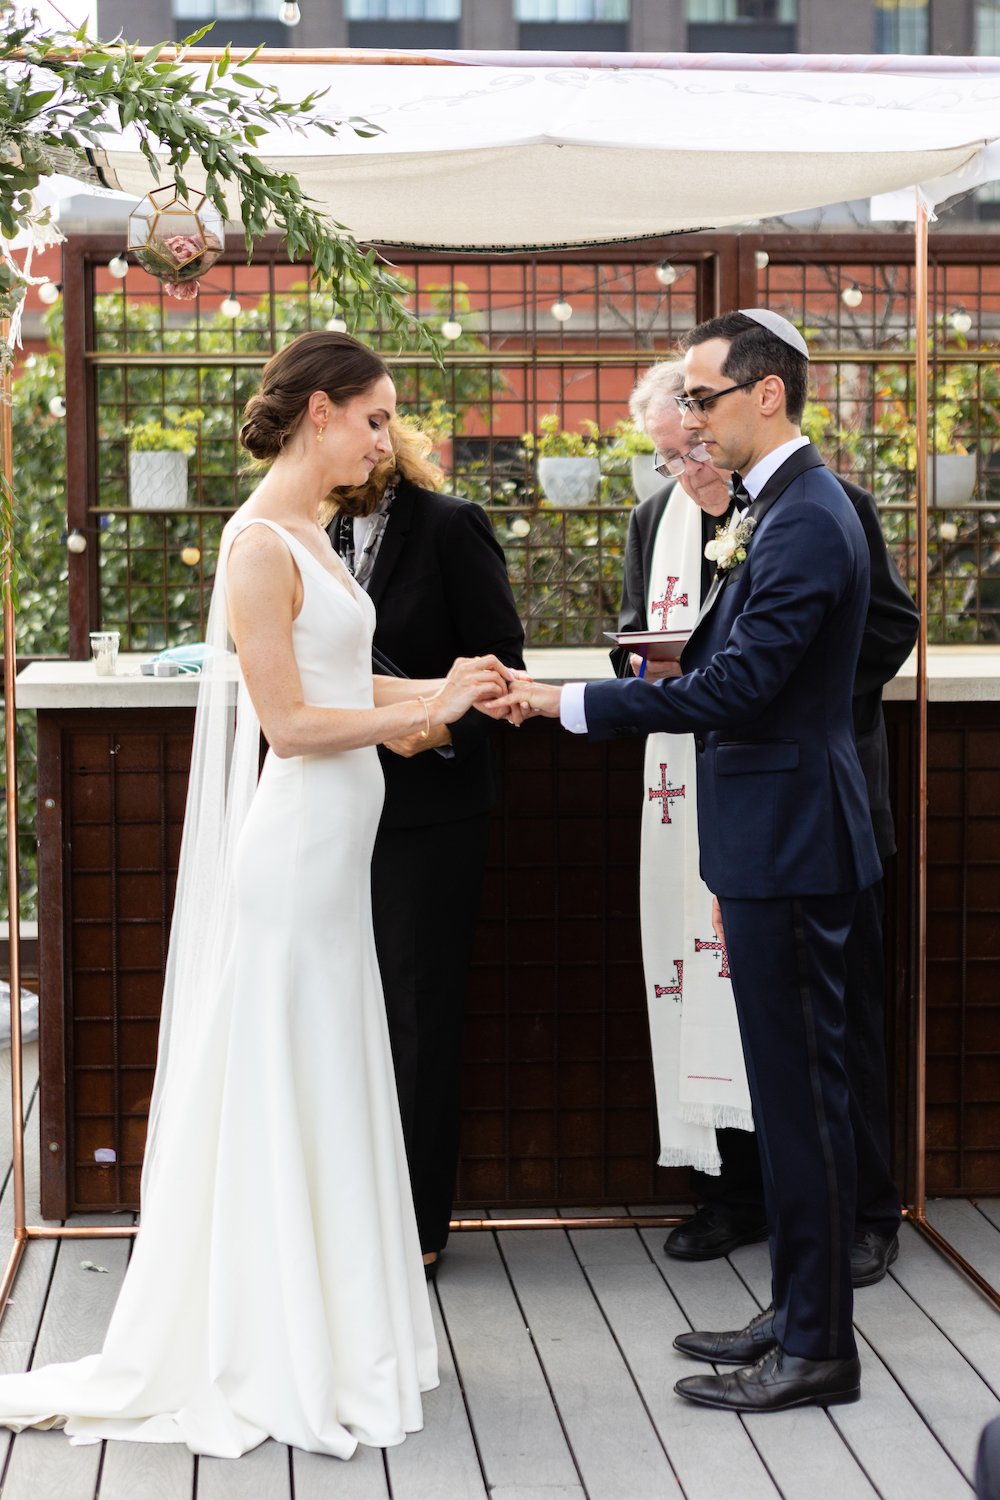 Bride_and_groom_exchanging_rings_under_huppah_chicago.jpg